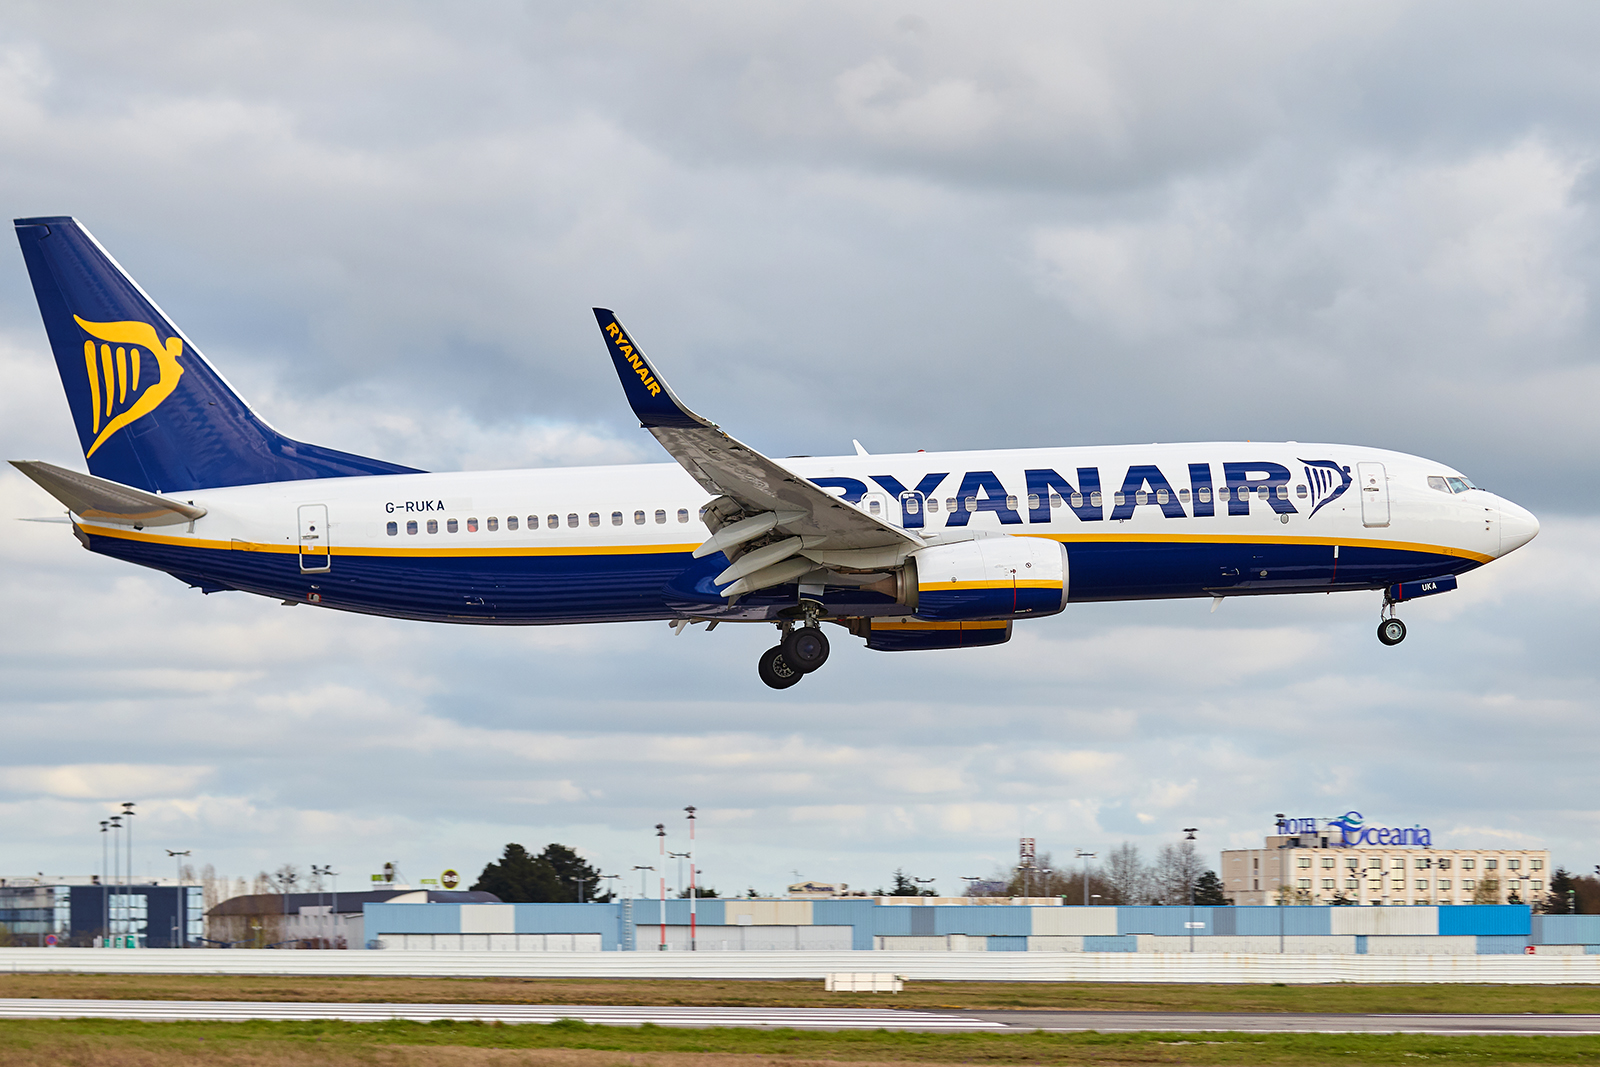 [15/03/2020] Boeing 737-800 (G-RUKA) Ryanair UK NIGoJb-GRX-1327